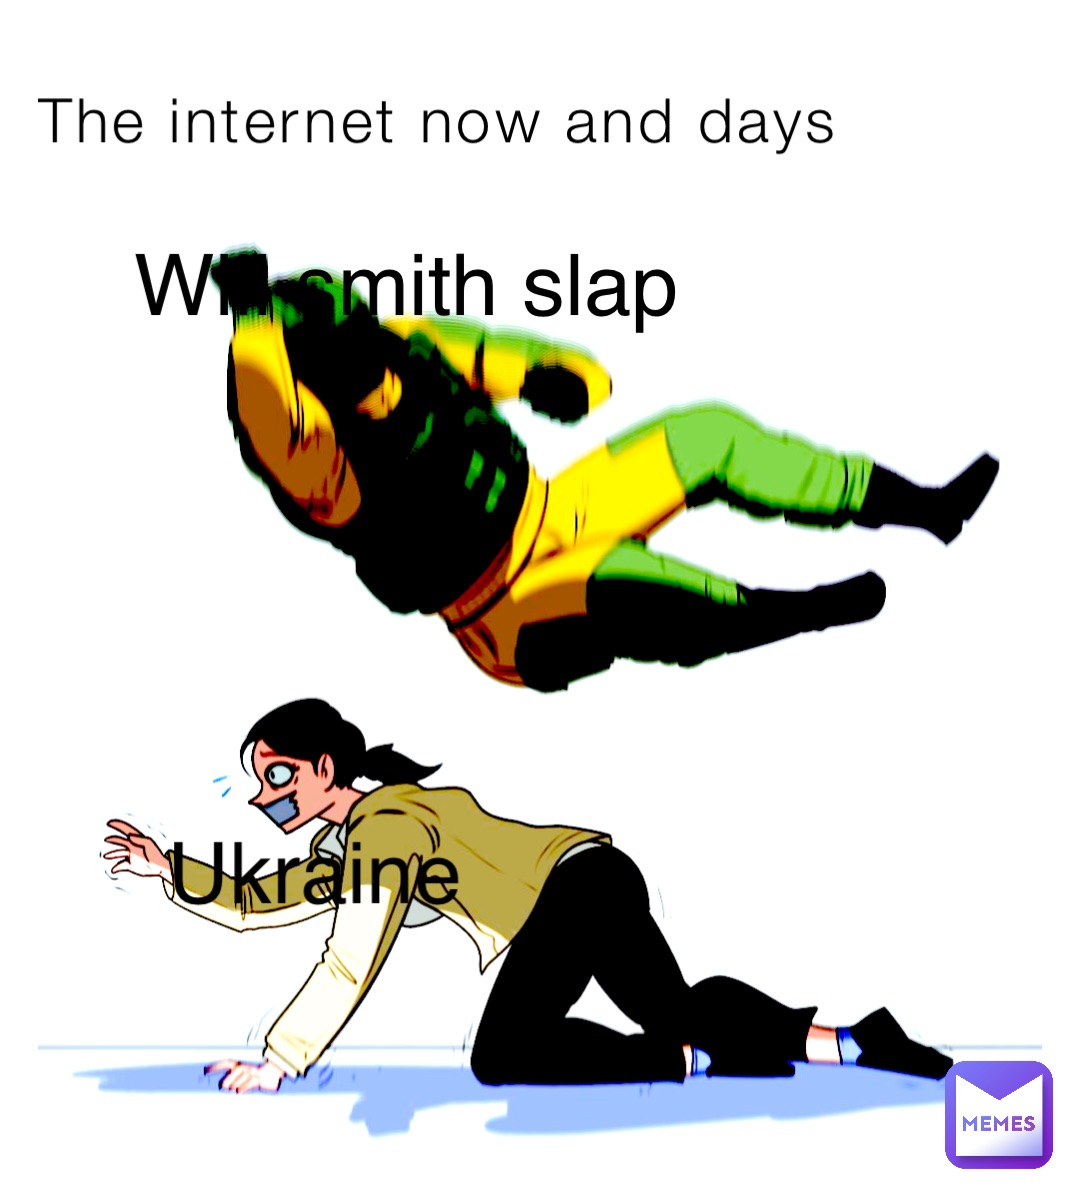 The internet now and days Ukraine Will smith slap